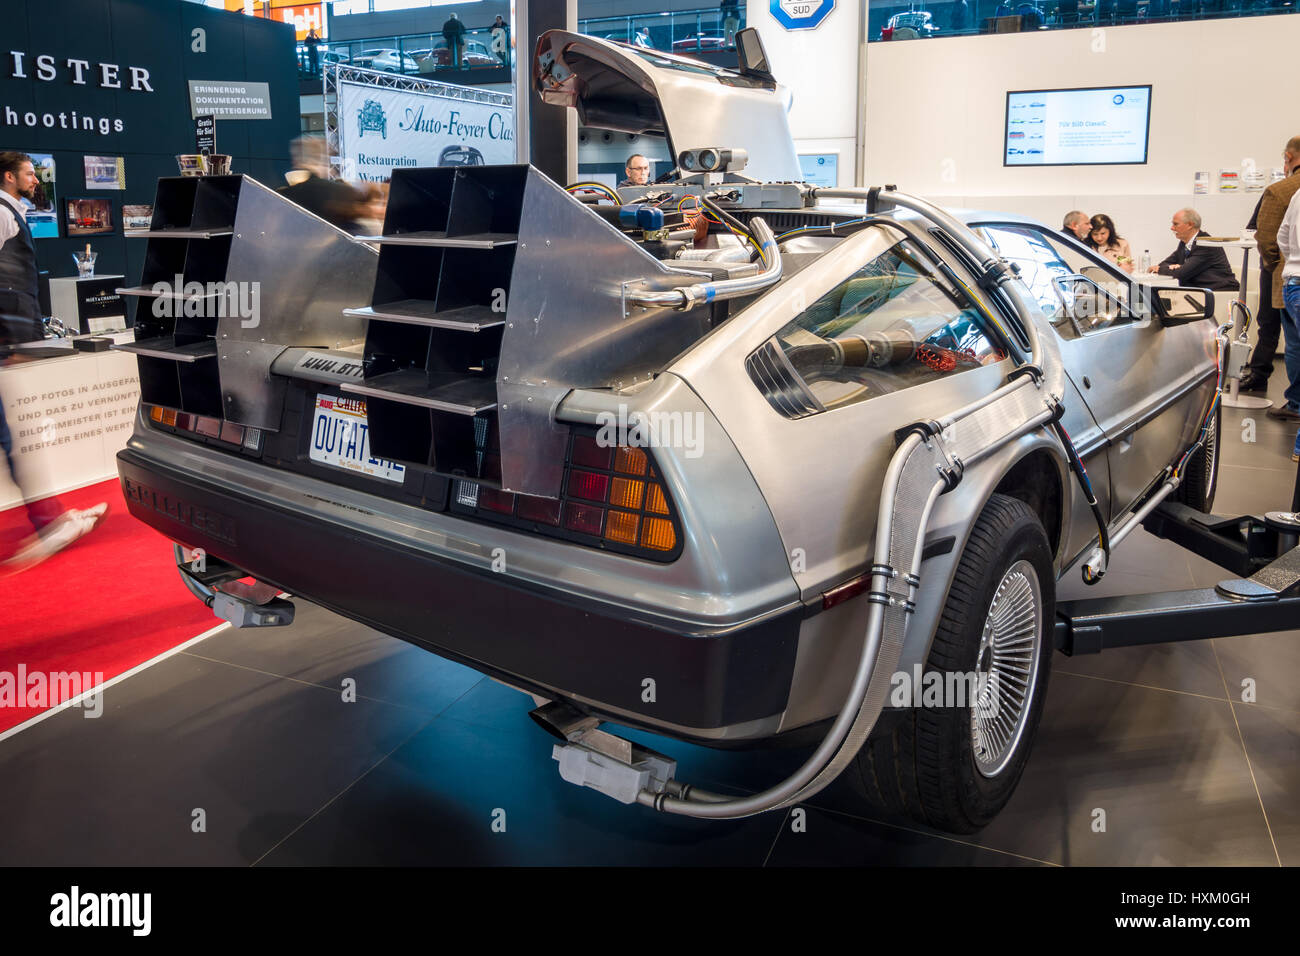 The DeLorean time machine (Back to the Future franchise) based on a DeLorean DMC-12 sports car. Stock Photo